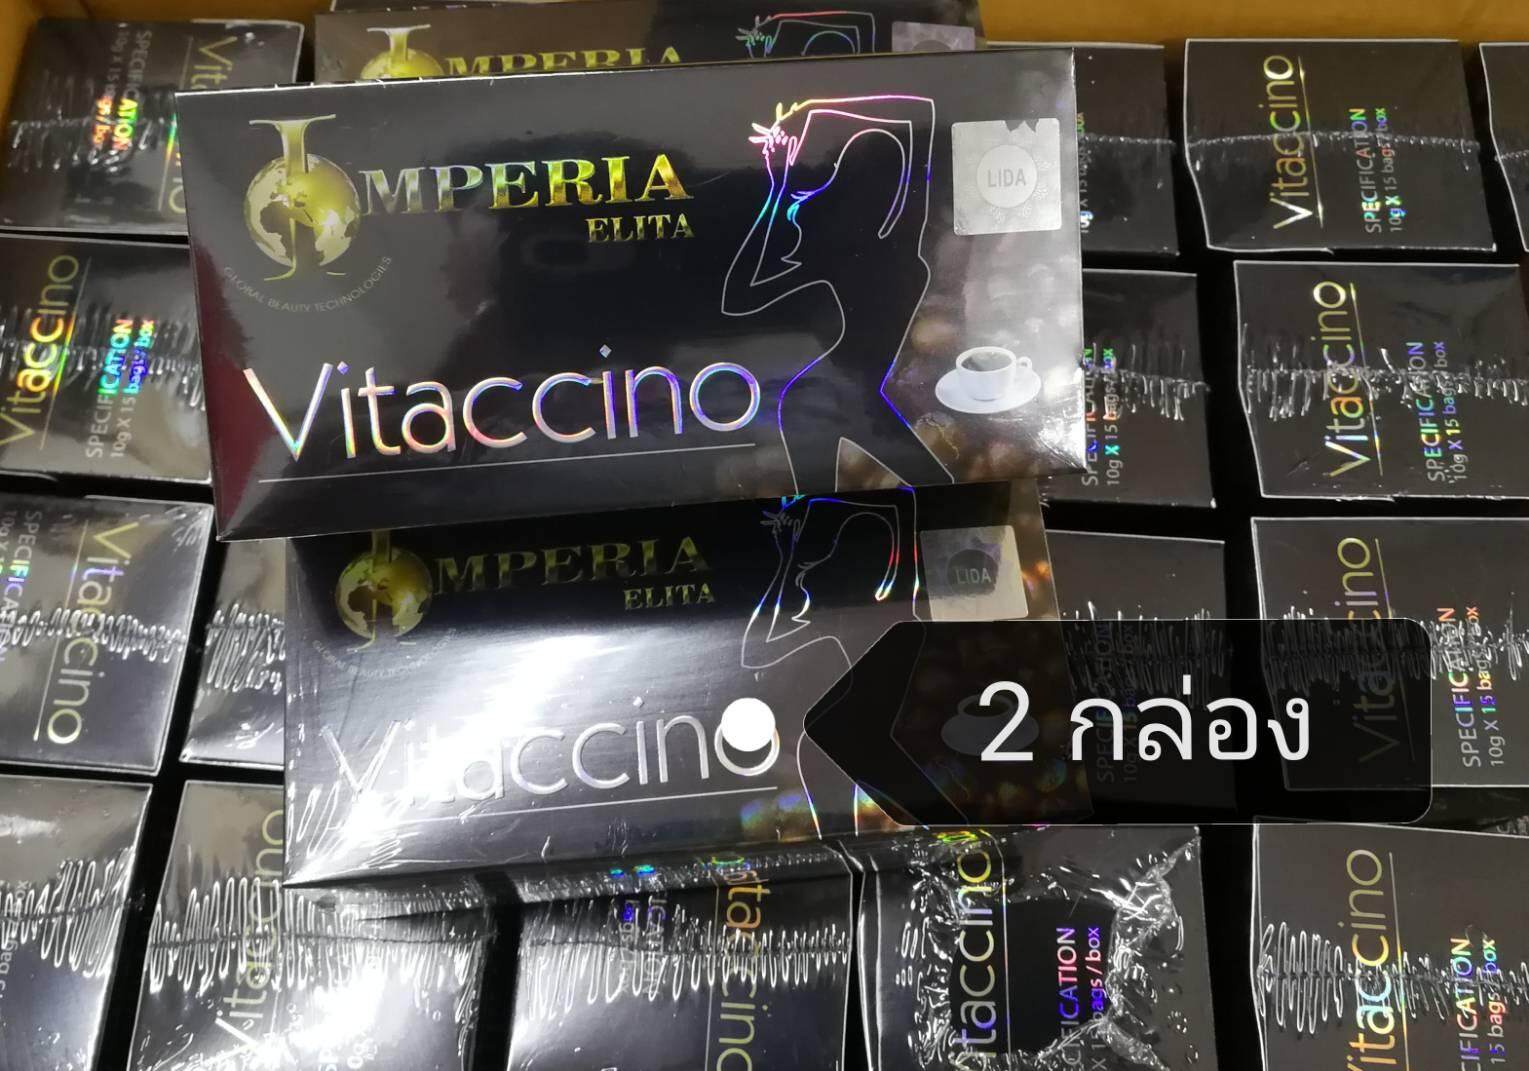 Vitaccino coffee กาแฟดำ ( 2 กล่อง) เกรดเอ มีสติกเกอร์ LIDA กาแฟลดน้ำหนัก กาแฟดำลดความอ้วน ไวแทคชิโน อีริต้า เฉลี่ย กล่องละ 108 บาท